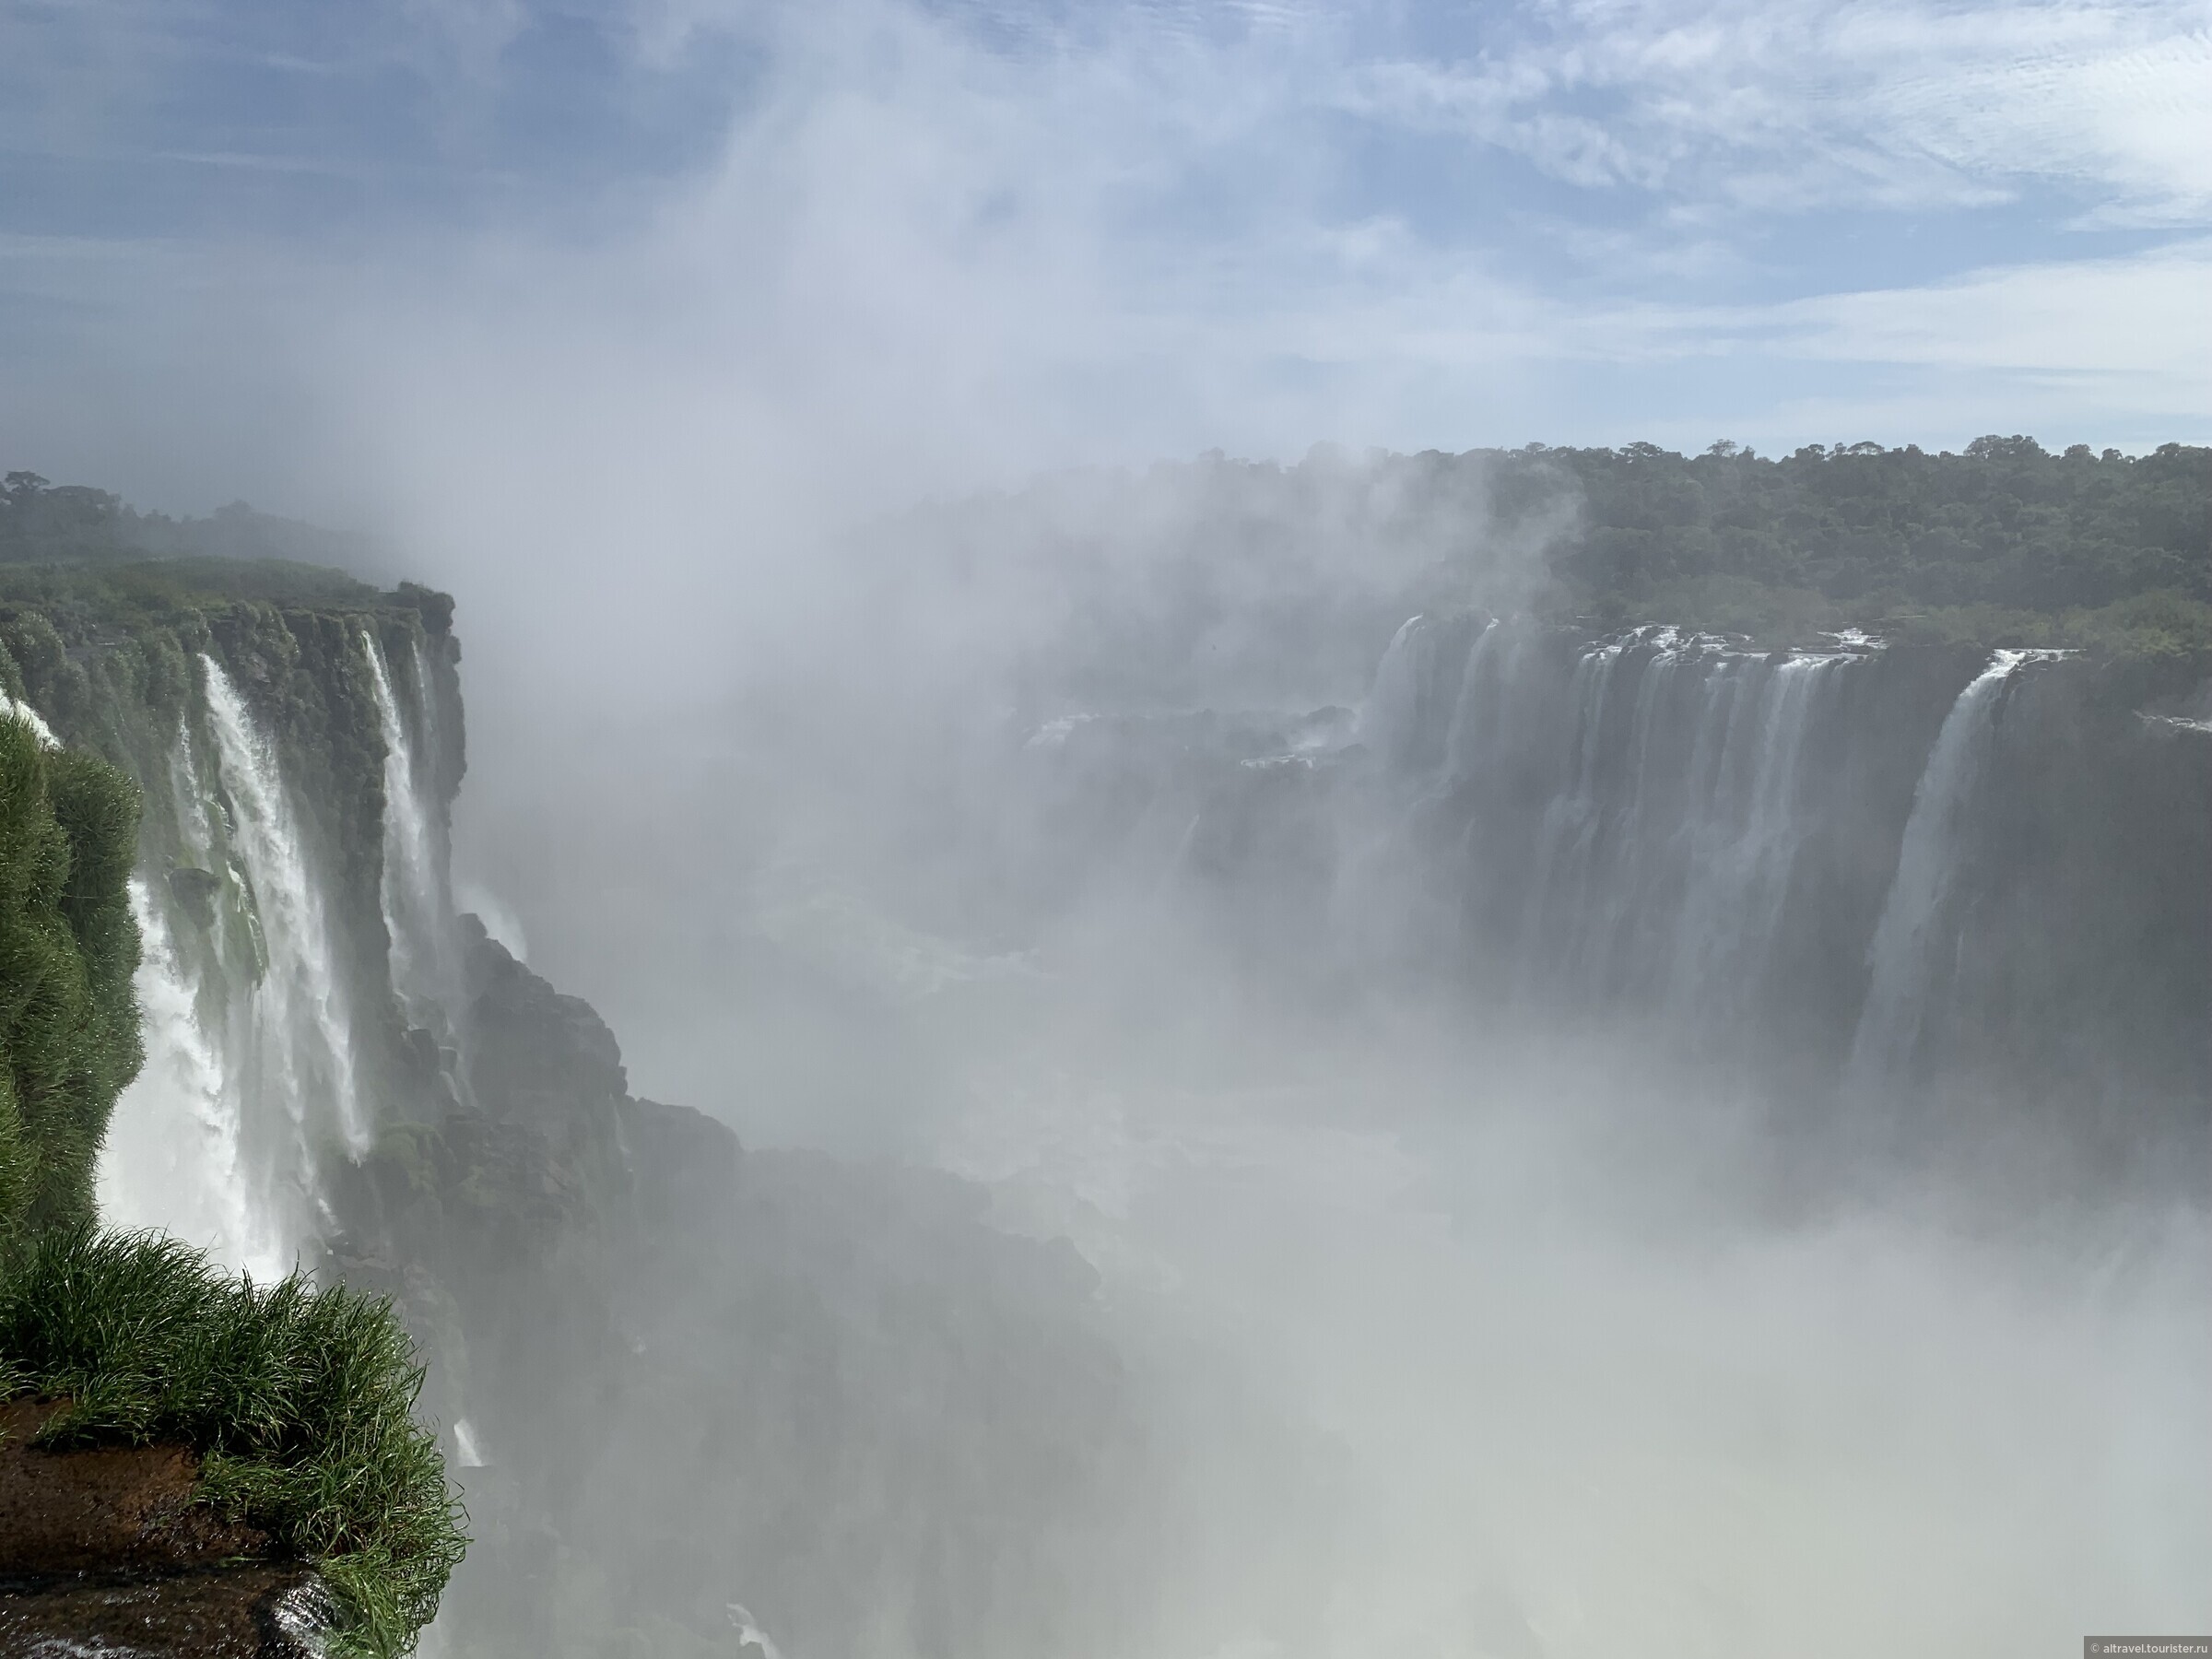 Широкий водопад в южной америке. Водопады Игуасу Аргентина Бразилия. Водопад Игуасу в Южной Америке. Глотка дьявола водопад Игуасу.